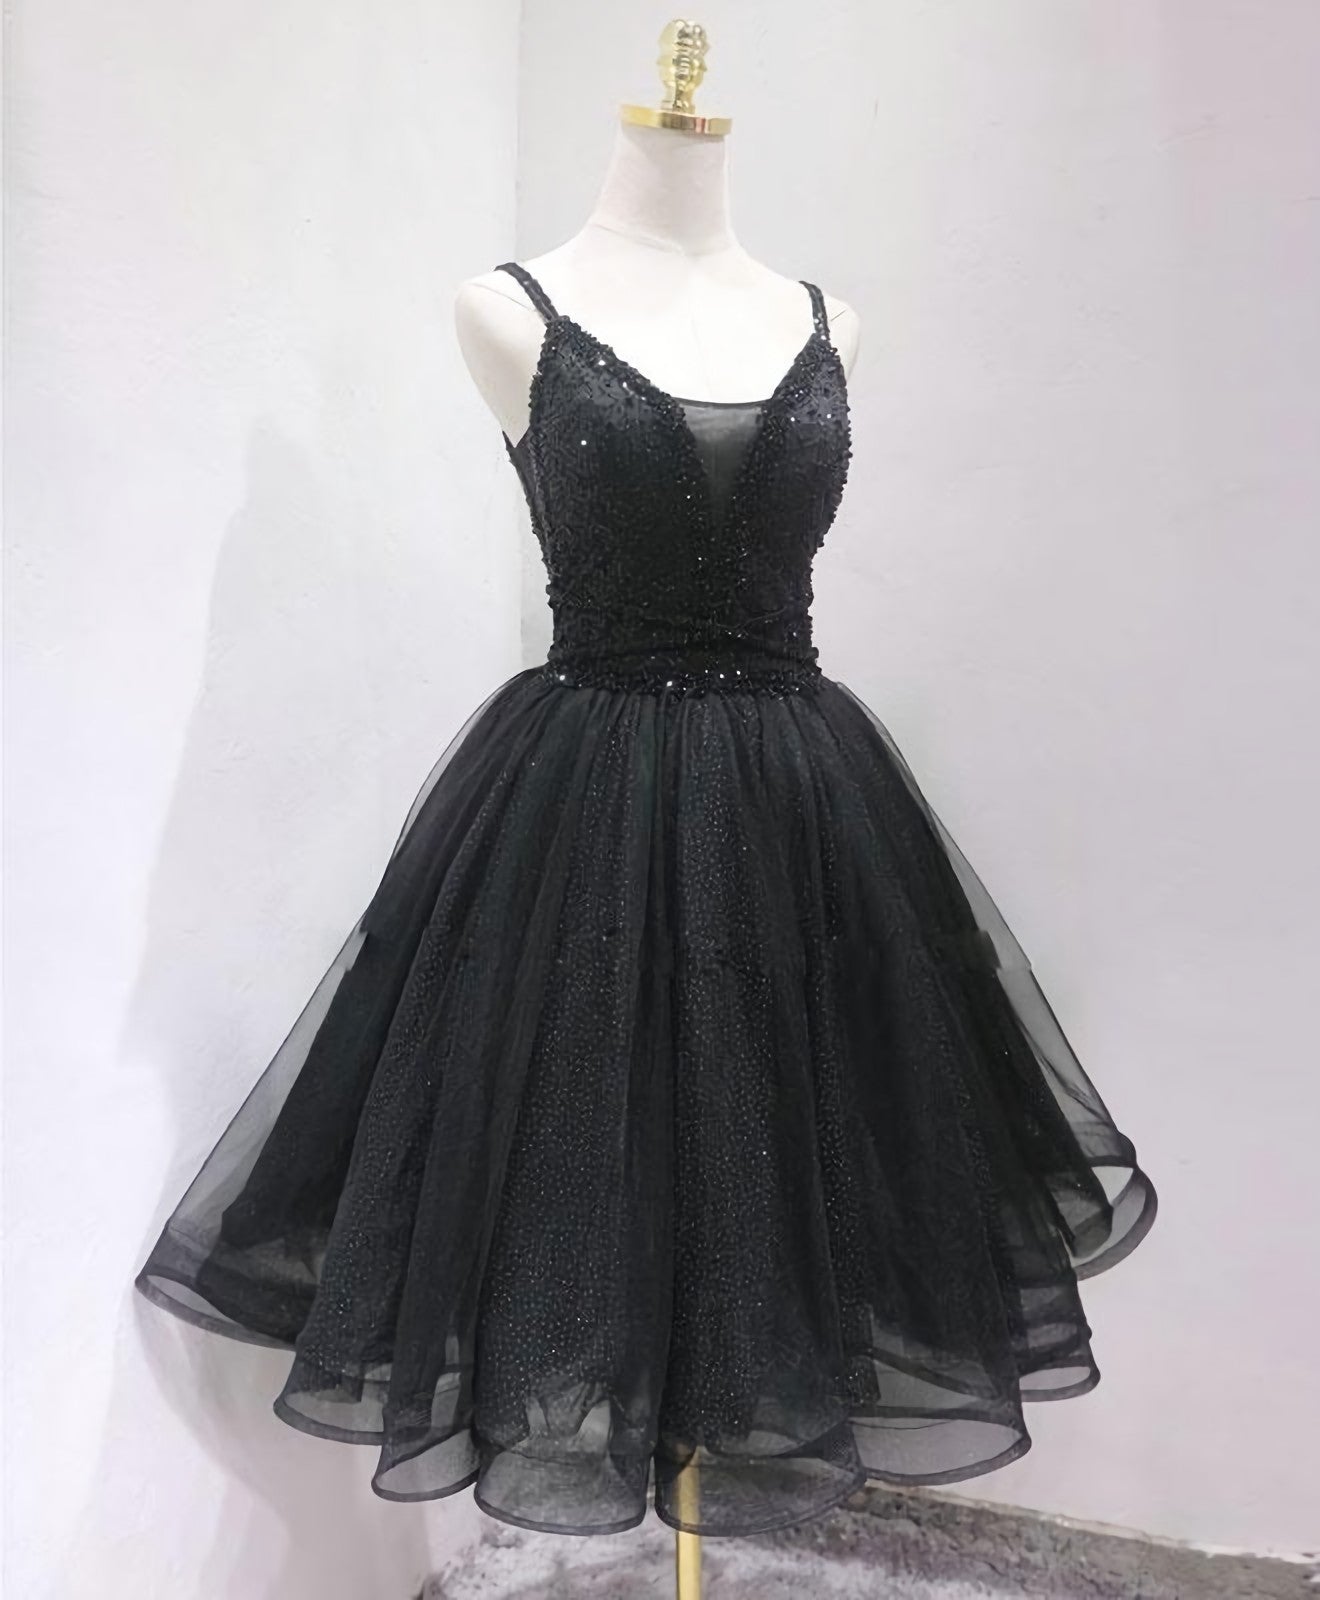 Black Tulle Beads Short Corset Prom Dress, Black Corset Homecoming Dress outfit, Homecoming Dress Black